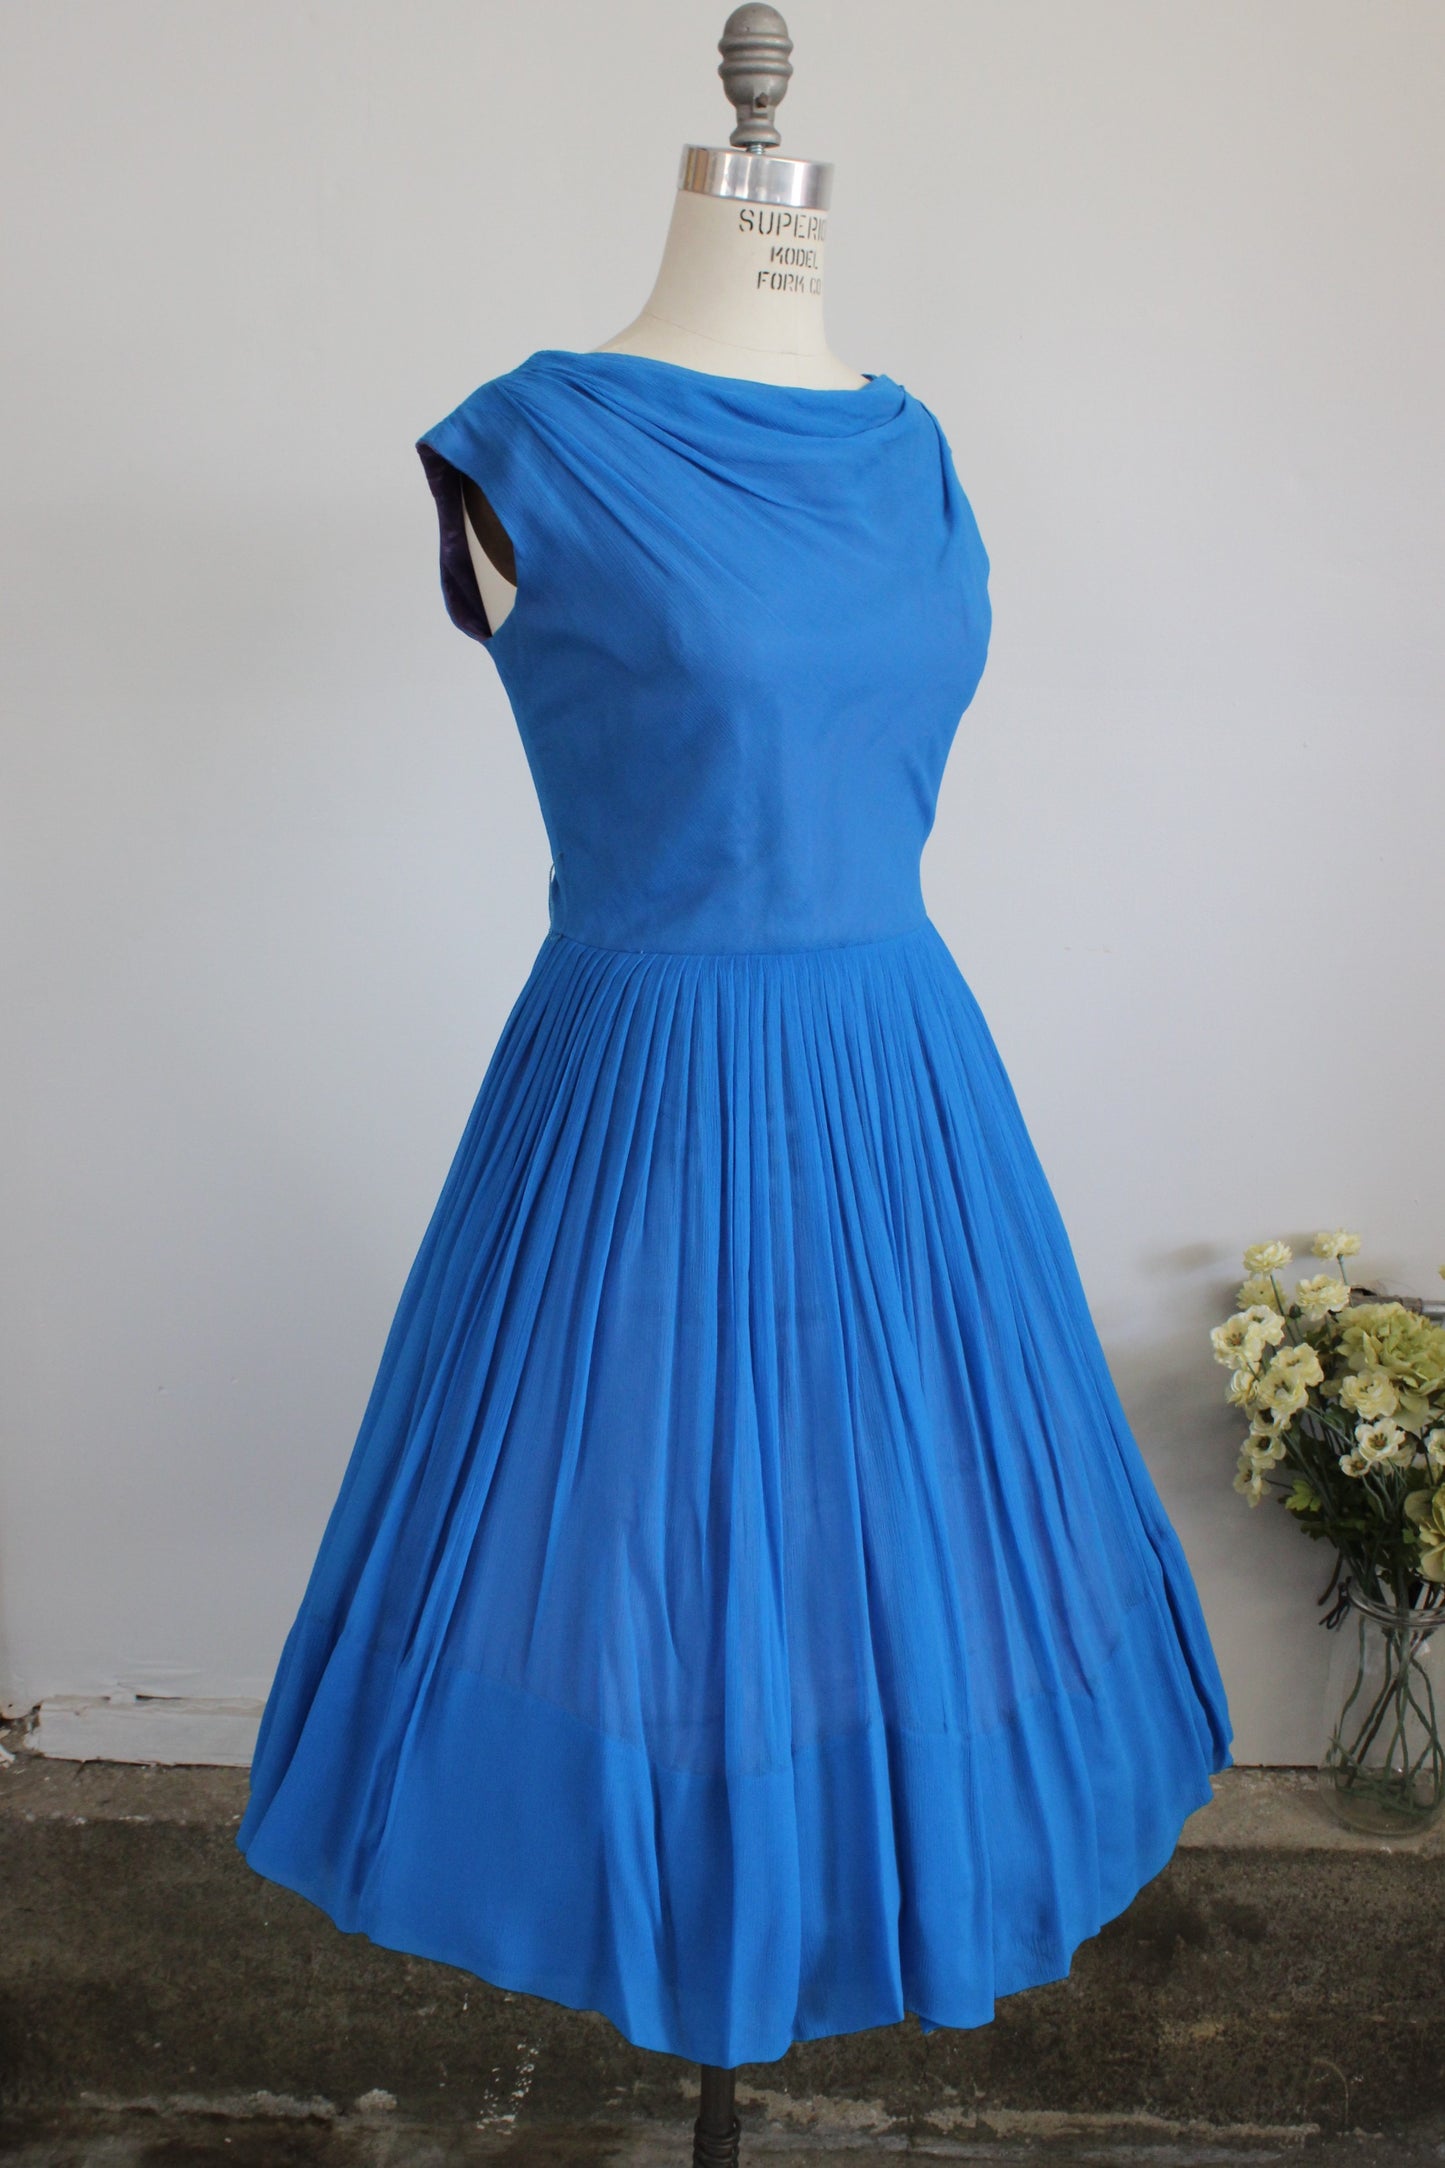 Vintage 1950s New Look Party Dress Blue Chiffon / Elinor Gay